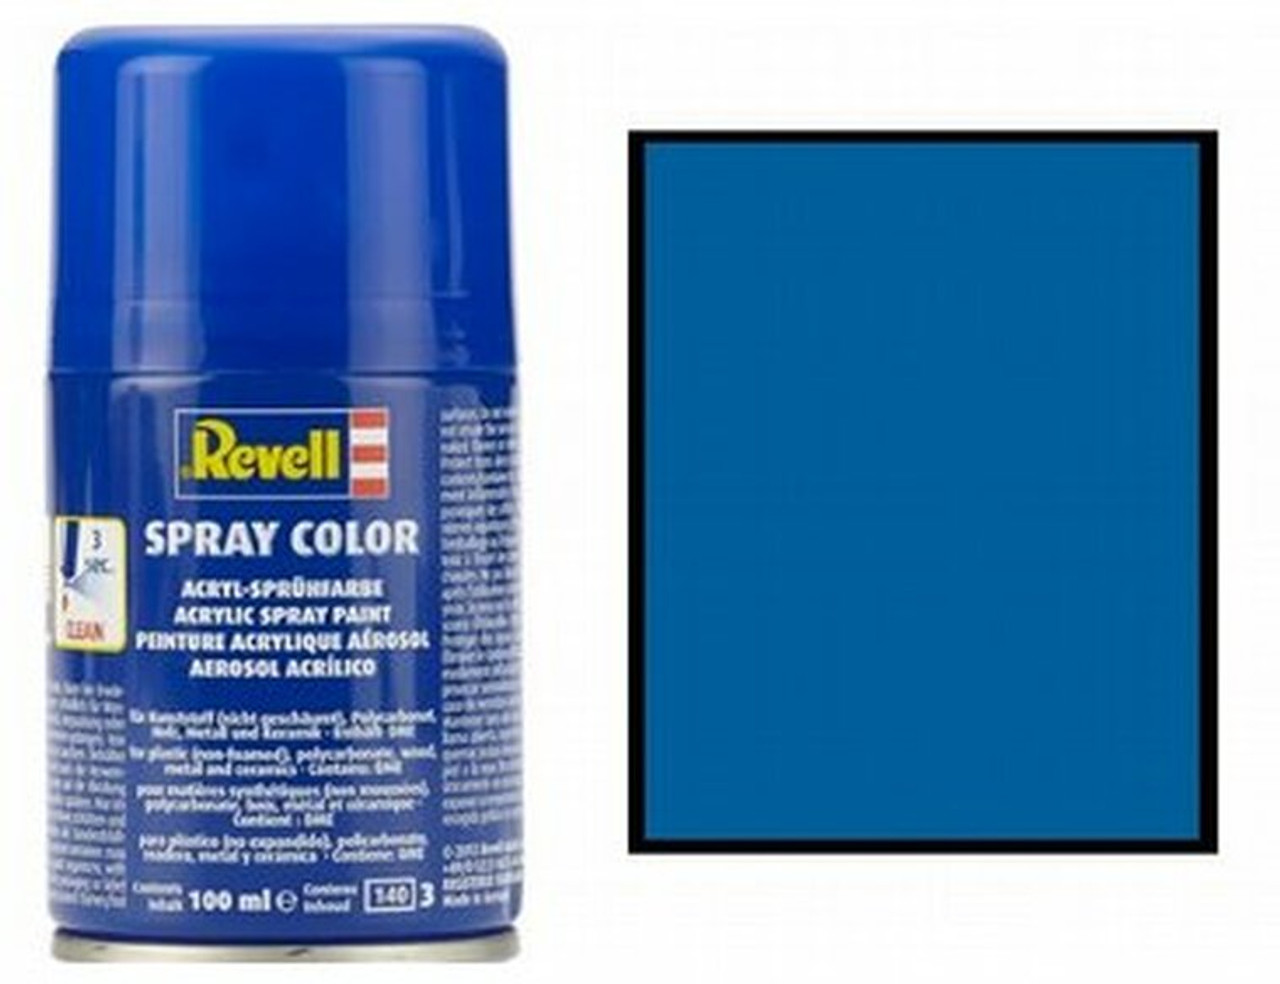 Revell-Paint Blue Gloss Spray Hobby and Model Acrylic Paint #34152